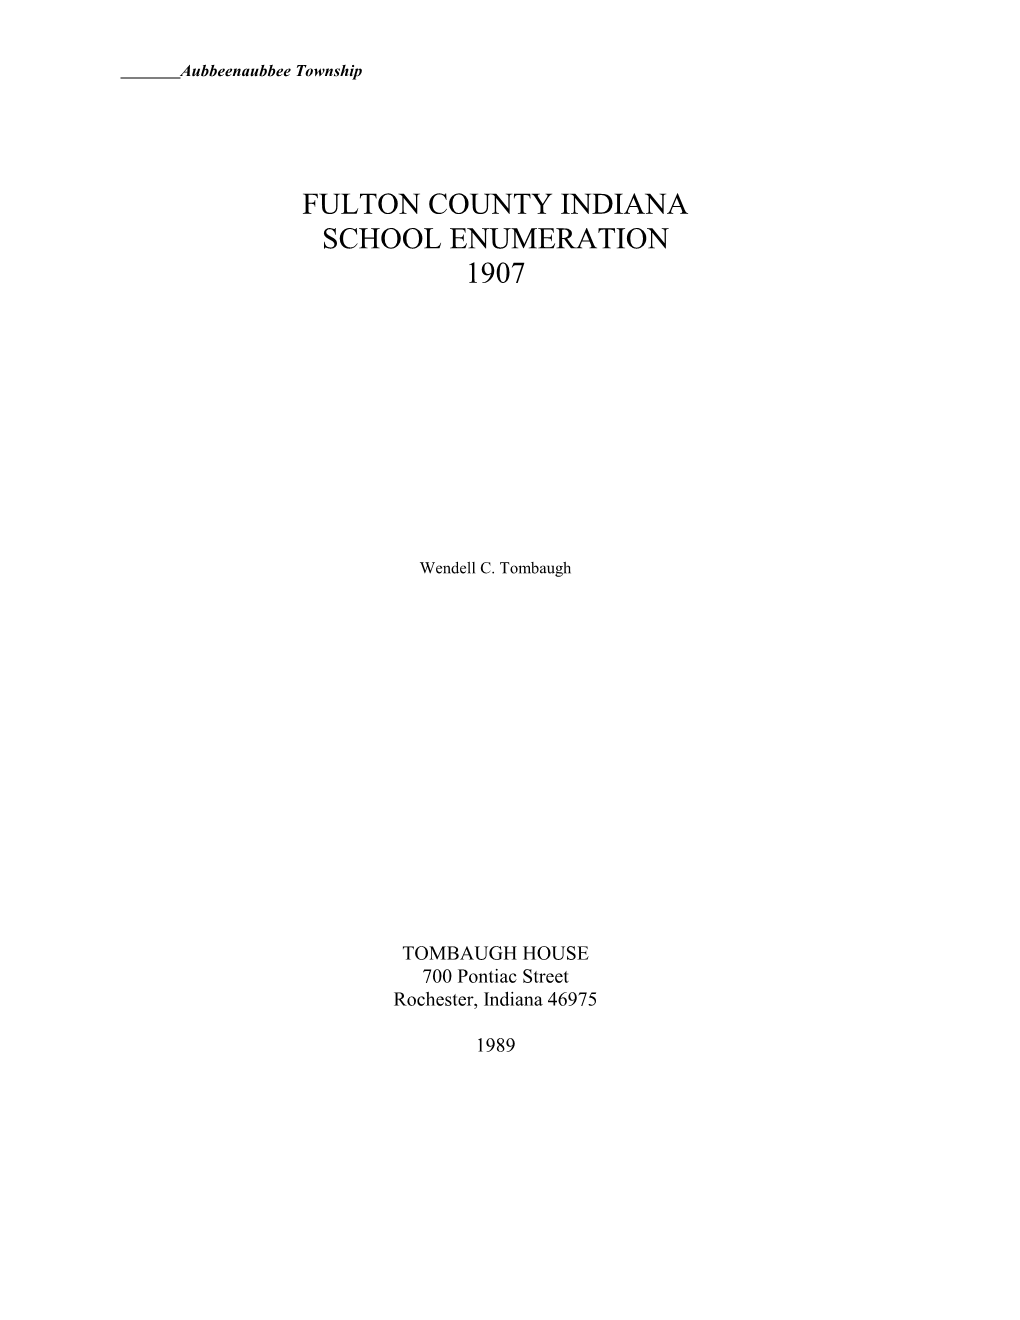 Fulton County Indiana School Enumeration 1907